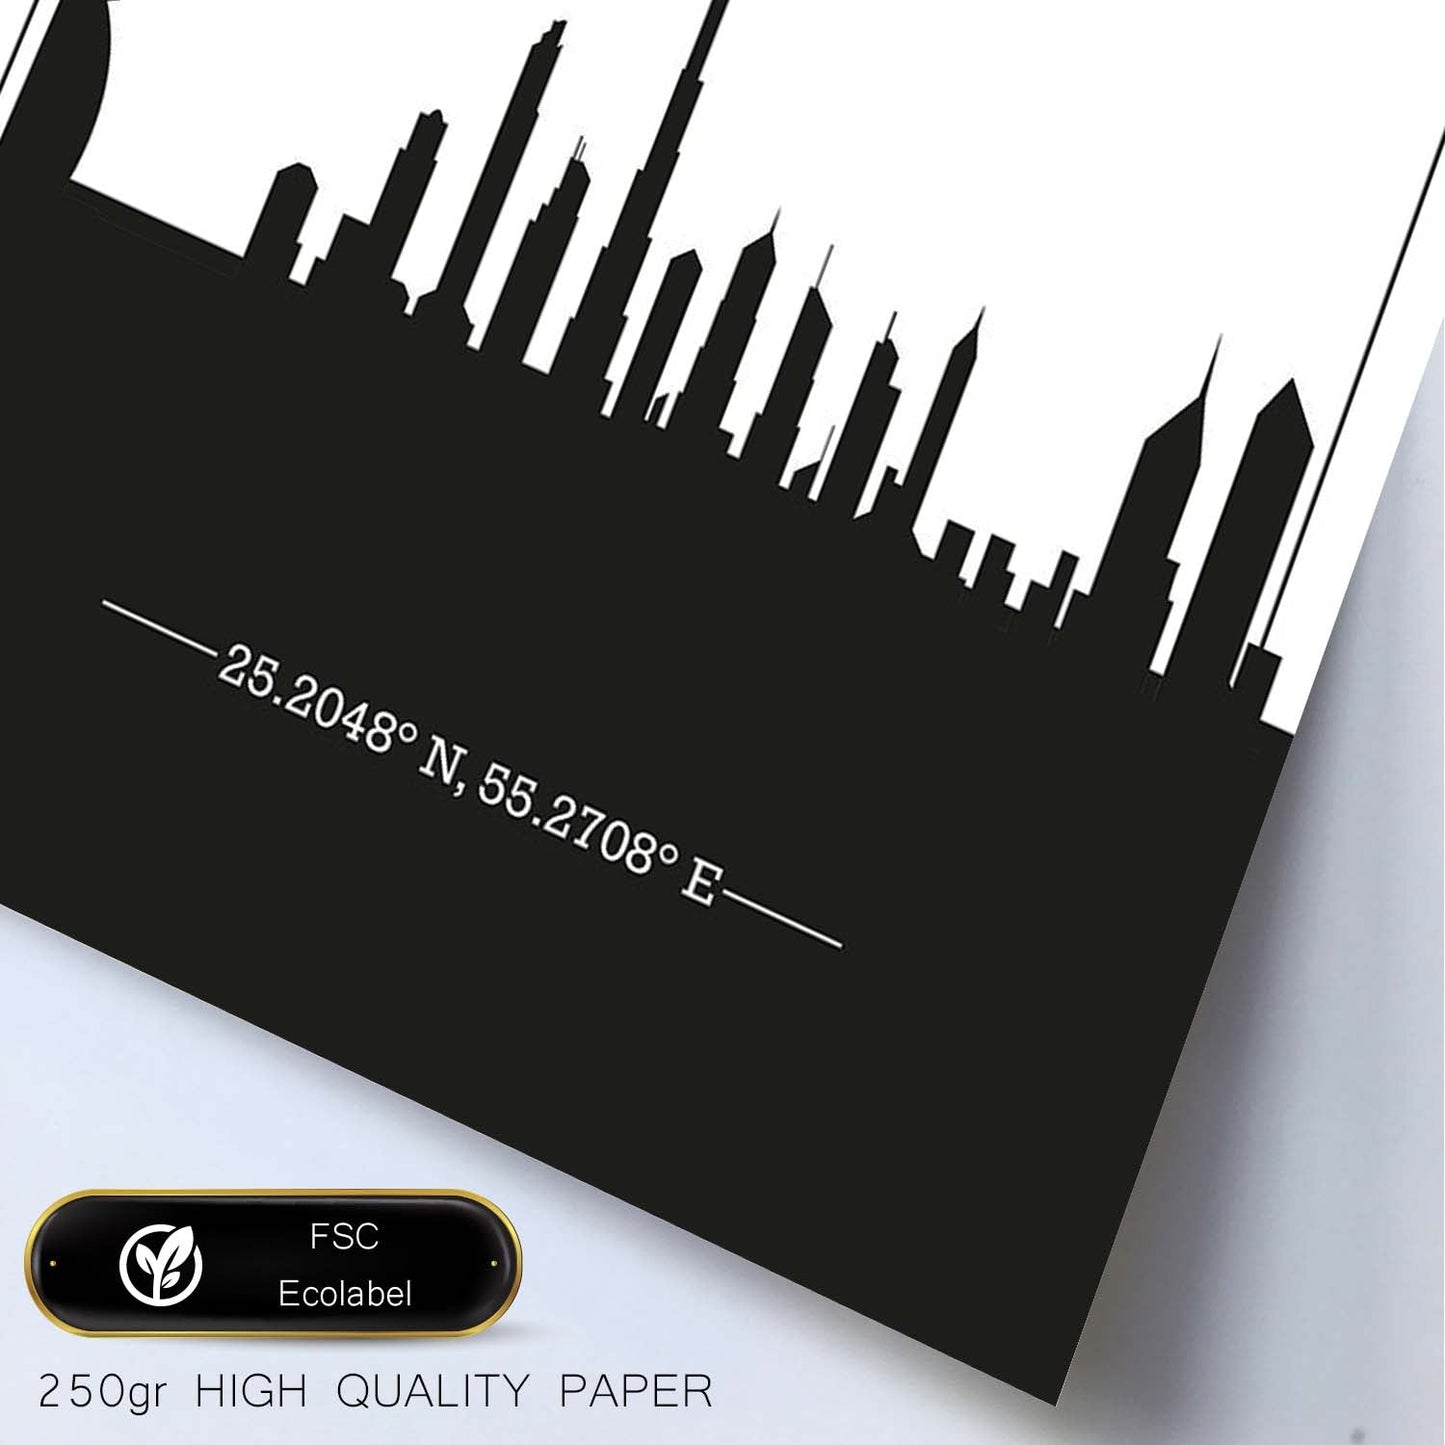 Poster con mapa de Dubai - Emiratos Arabes Unidos. Láminas con Skyline de ciudades de Asia, Australia, y Oriente Medio con sombra negra.-Artwork-Nacnic-Nacnic Estudio SL